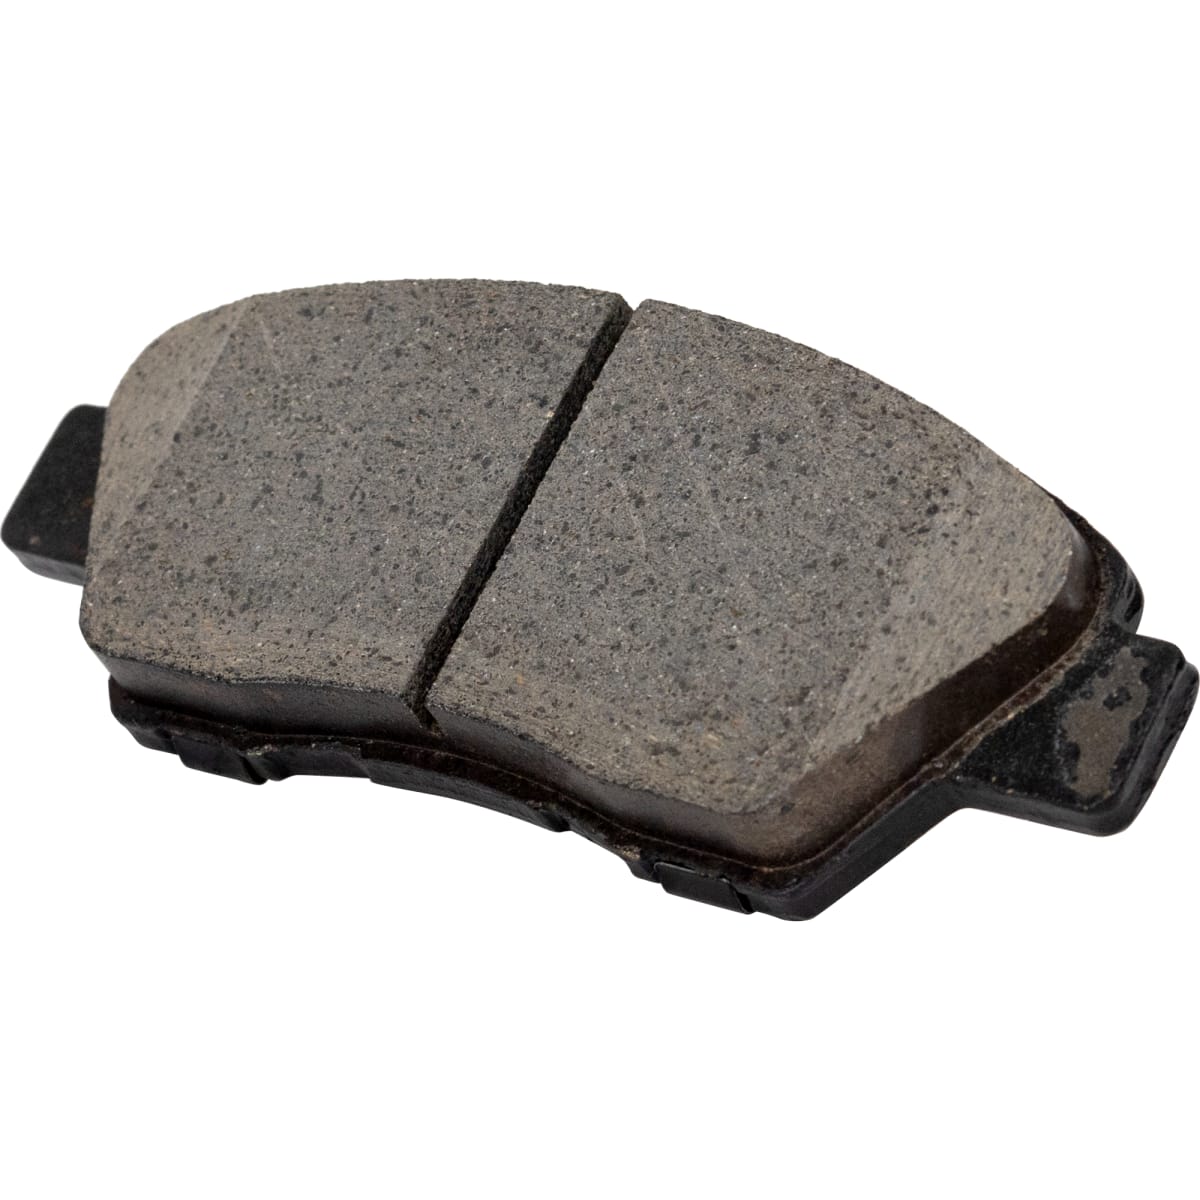 2015 fit brake pads